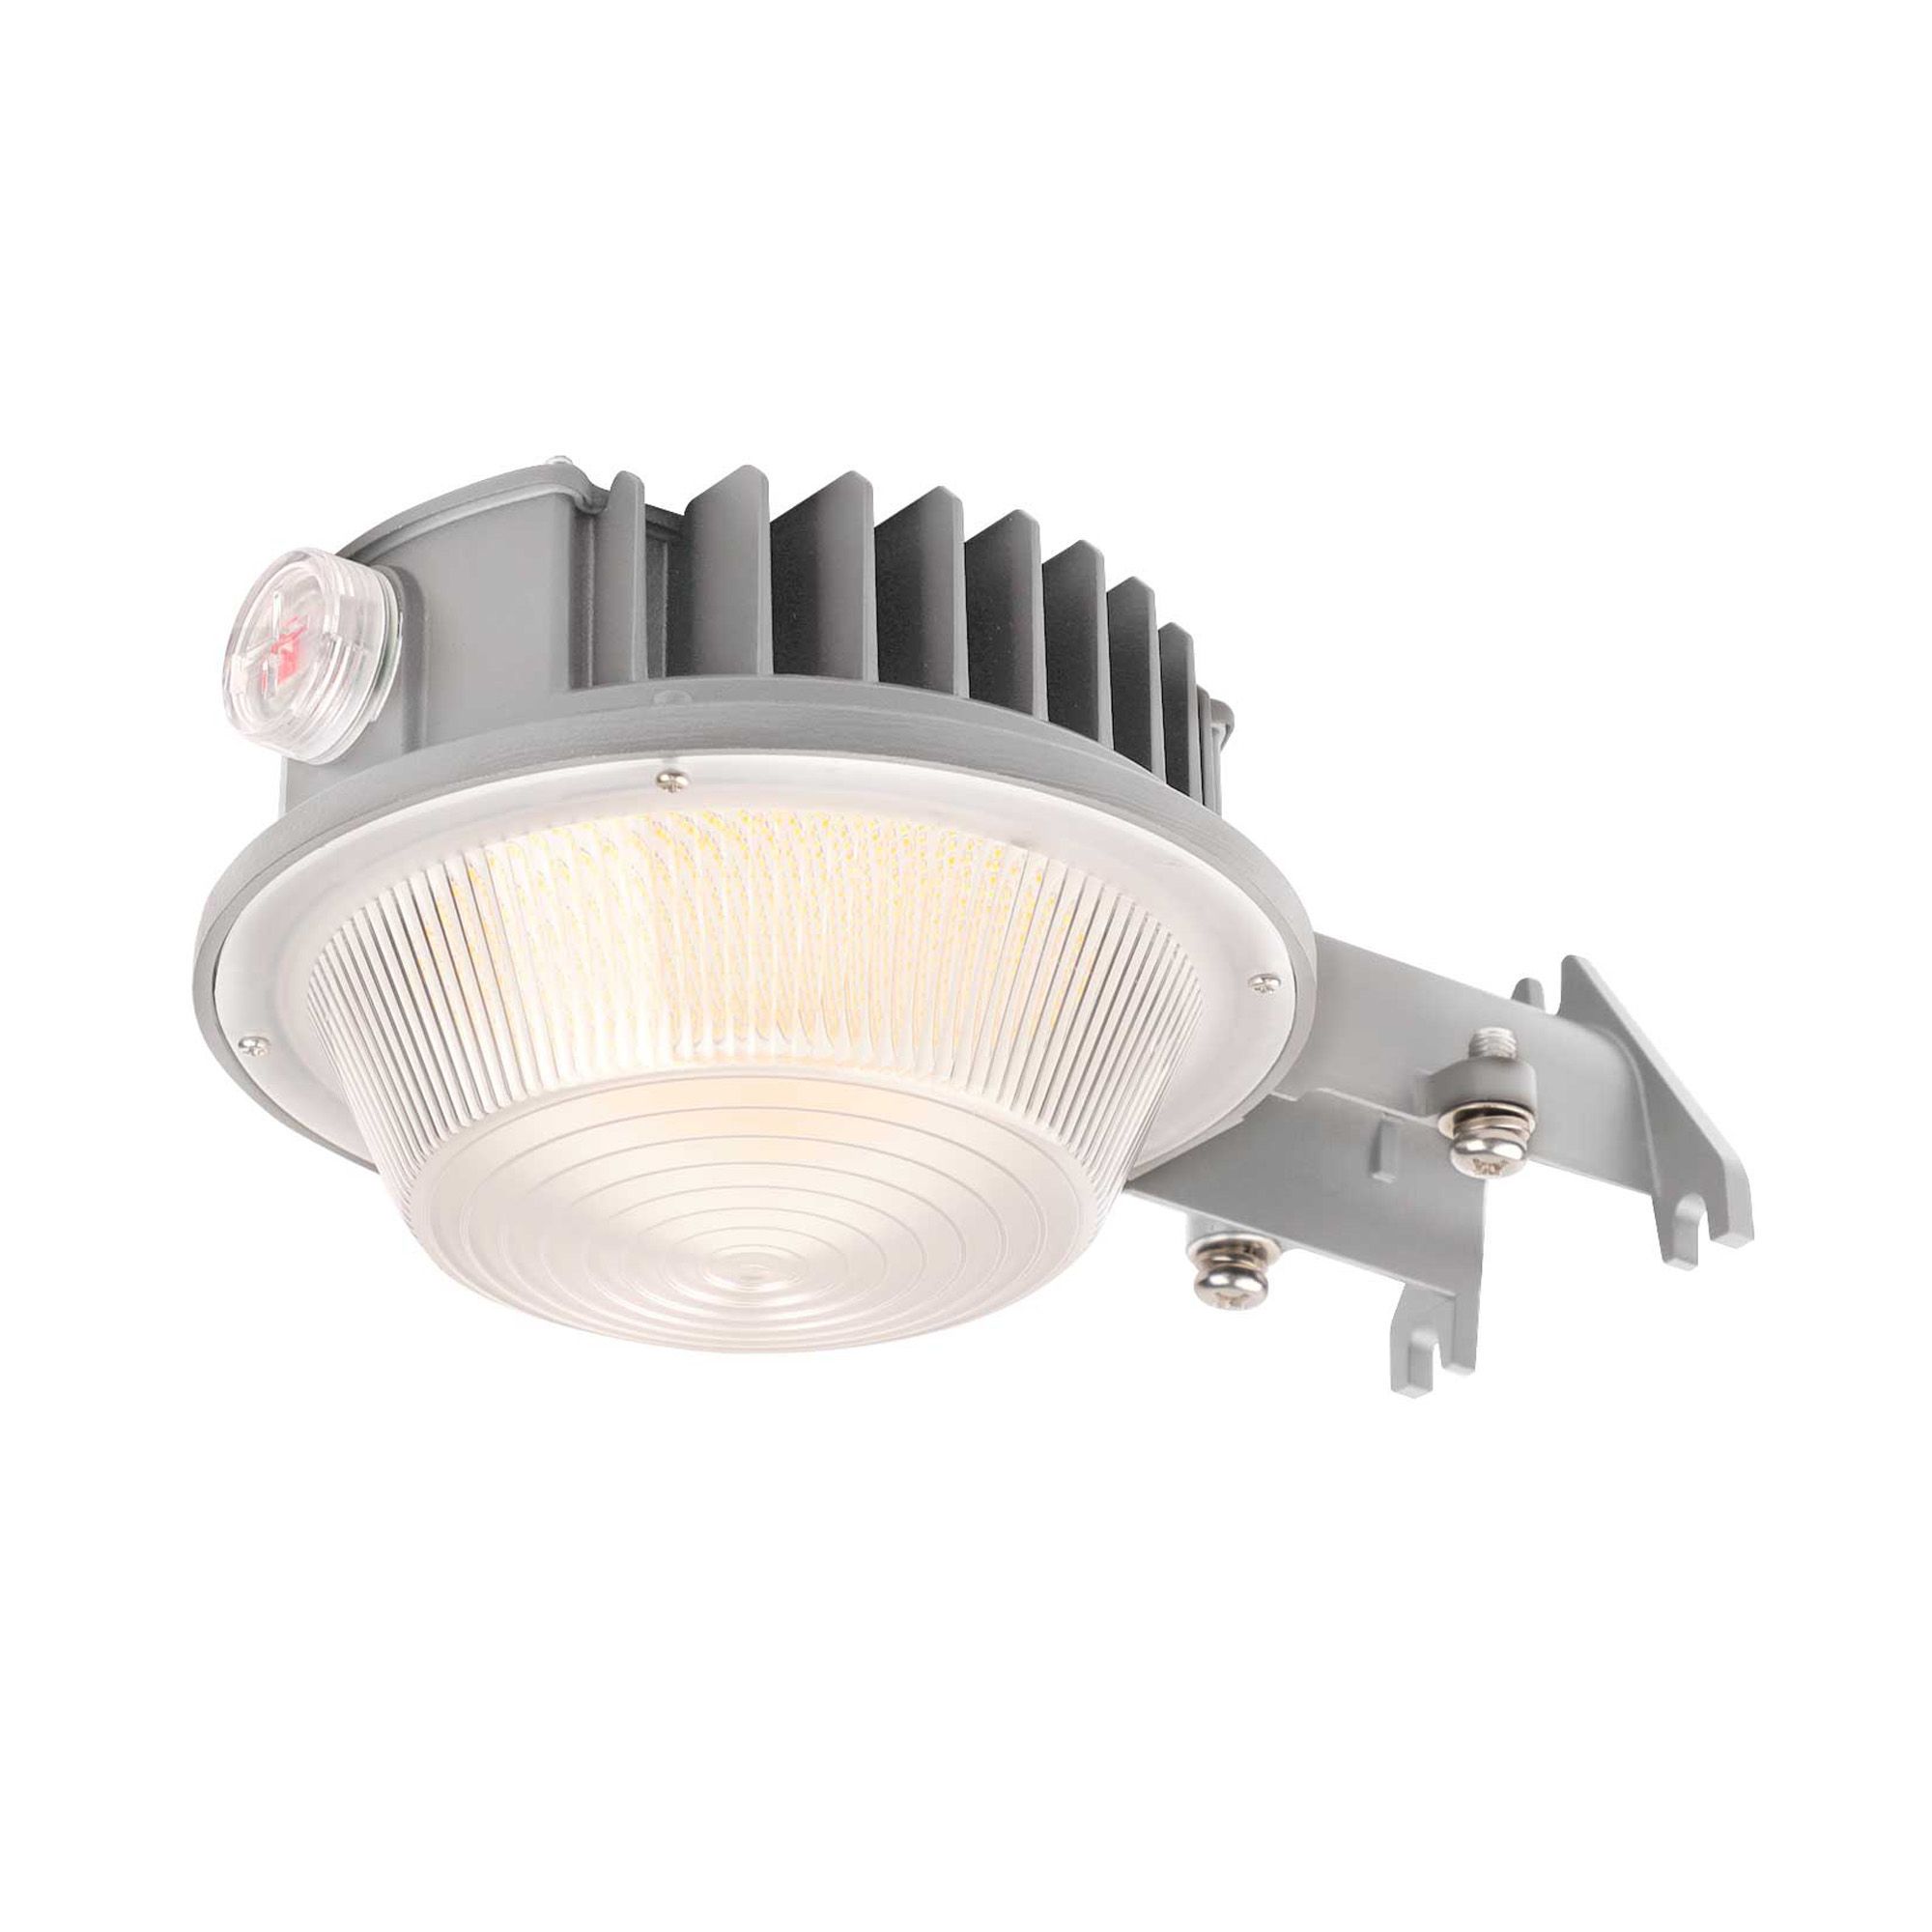 Luminaire sentinelle DEL 60 W, 100-277 V de TECHNO-LED